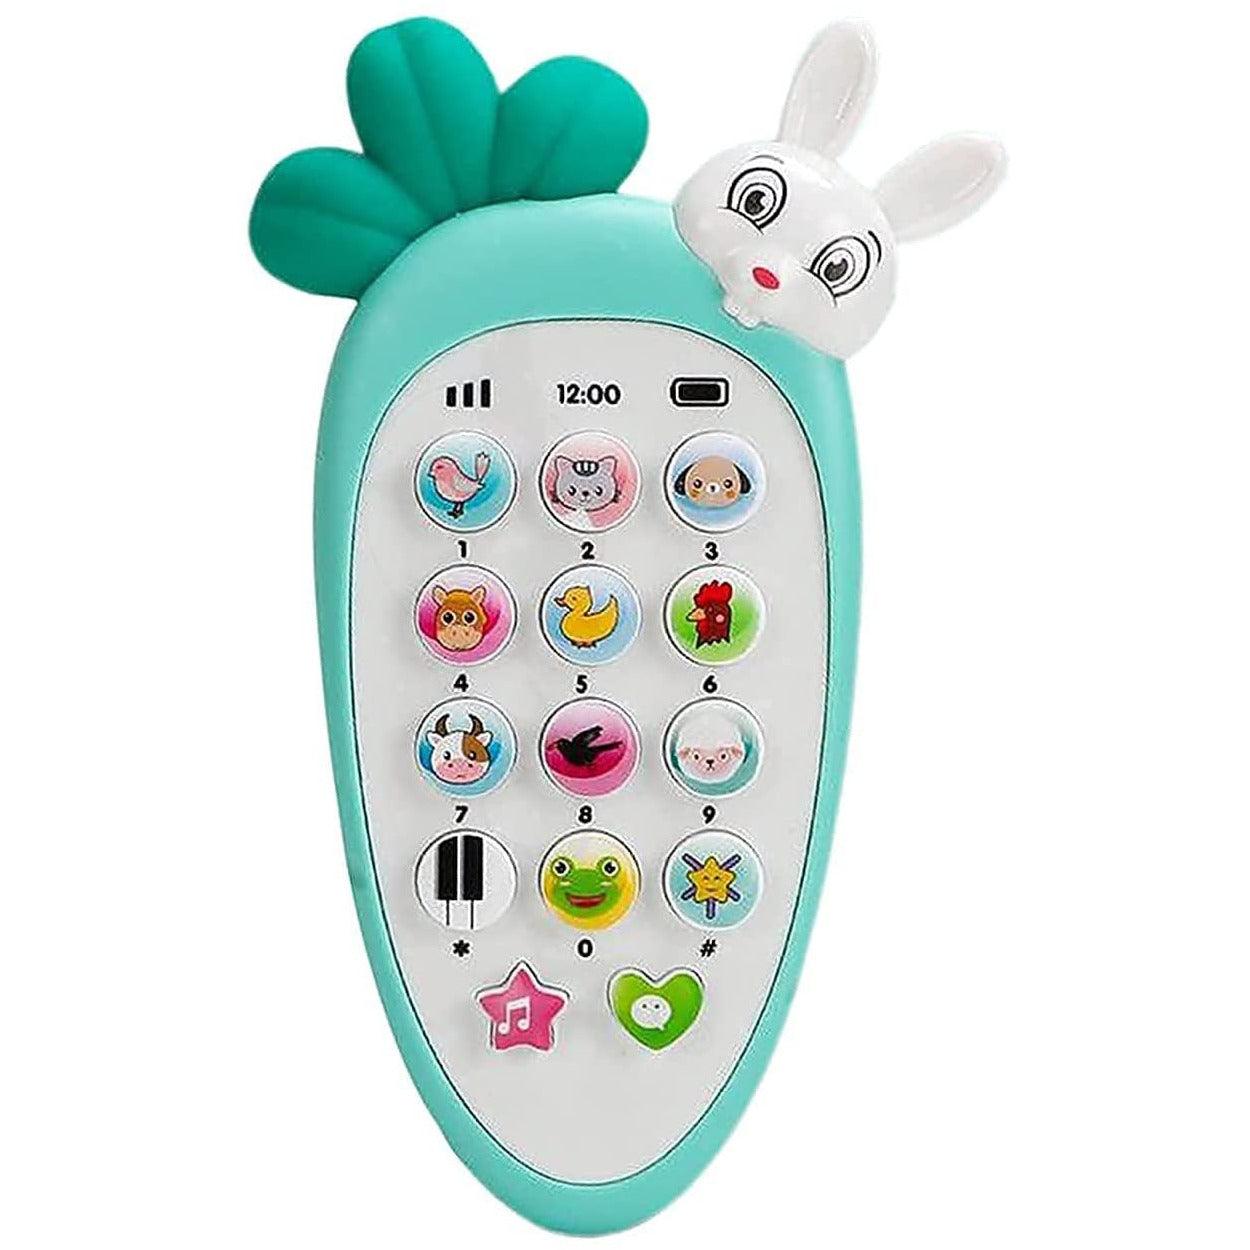 V-cap Phone Wireless Feature ألعاب هاتف محمول هاتف محمول للأطفال هاتف هاتف صغير لعبة موسيقية ألعاب موسيقية متعددة الألوان 